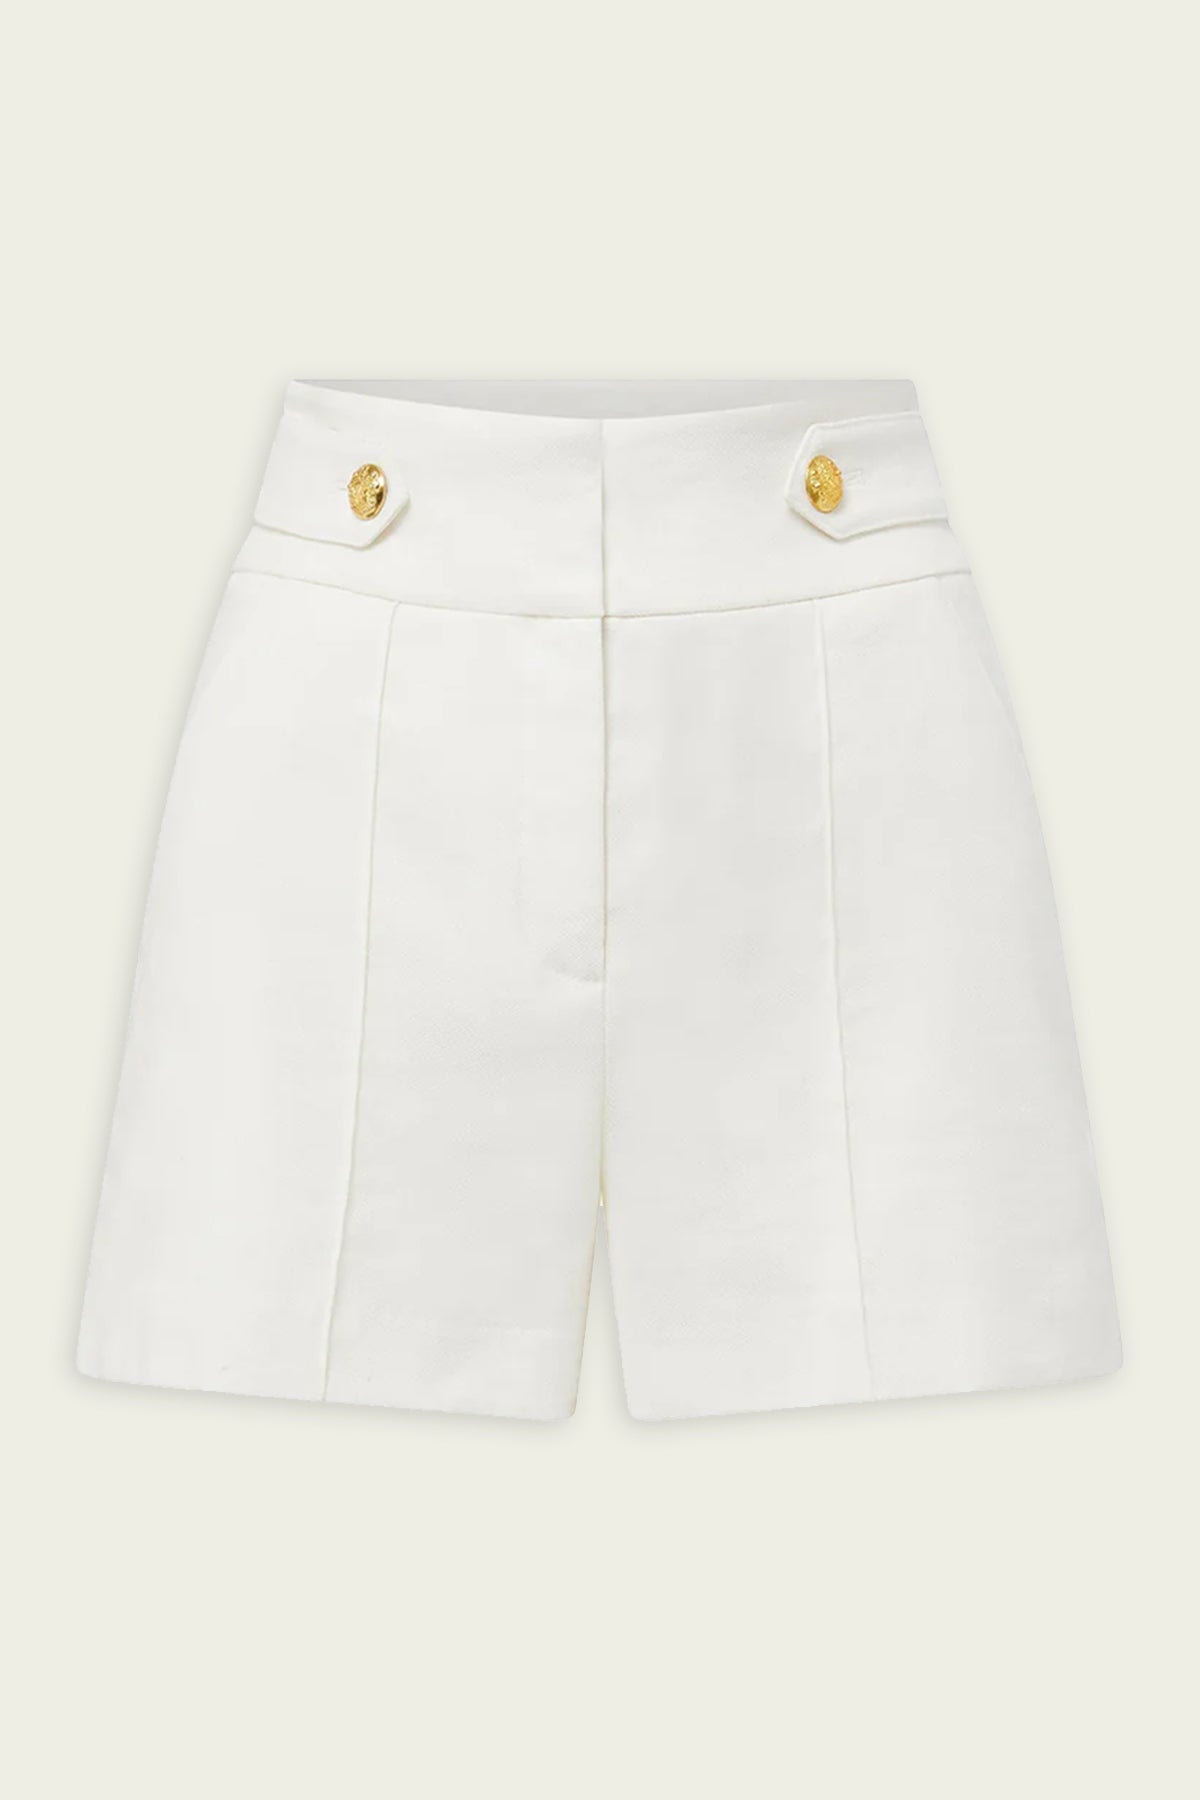 Runo Linen Short in White - shop-olivia.com